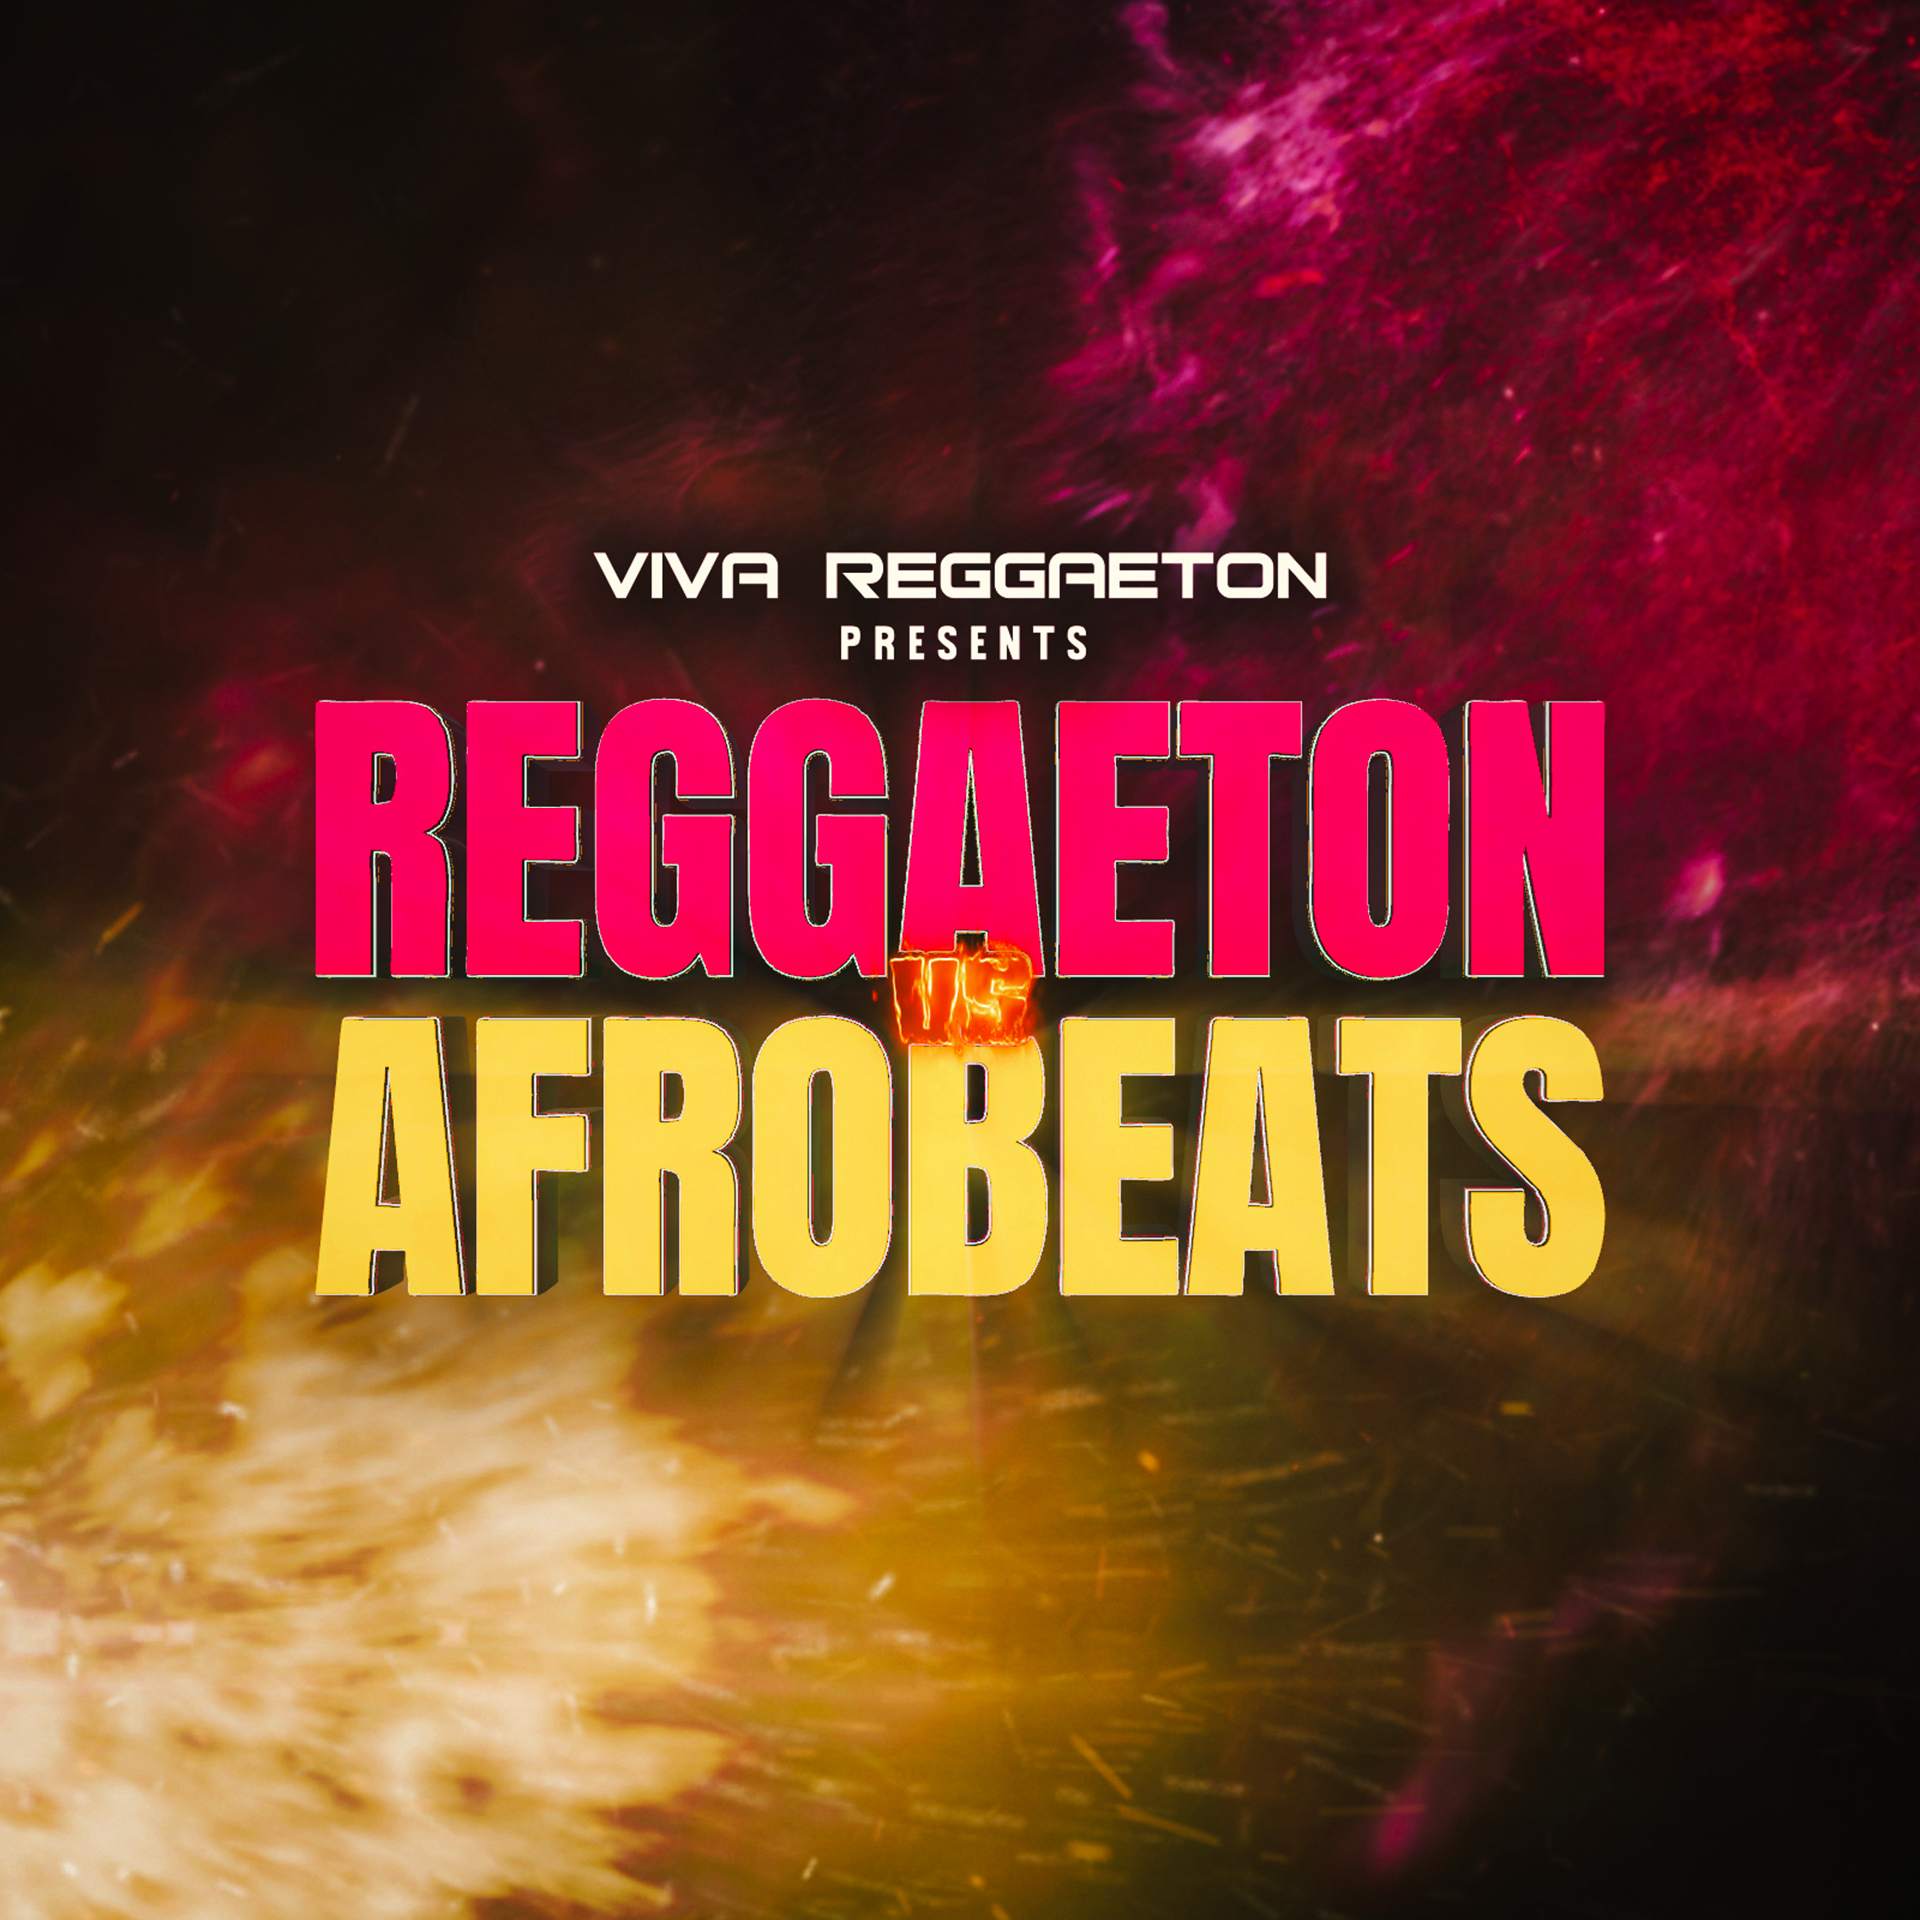 VIVA Reggaeton - Reggaeton vs Afrobeats - フライヤー表